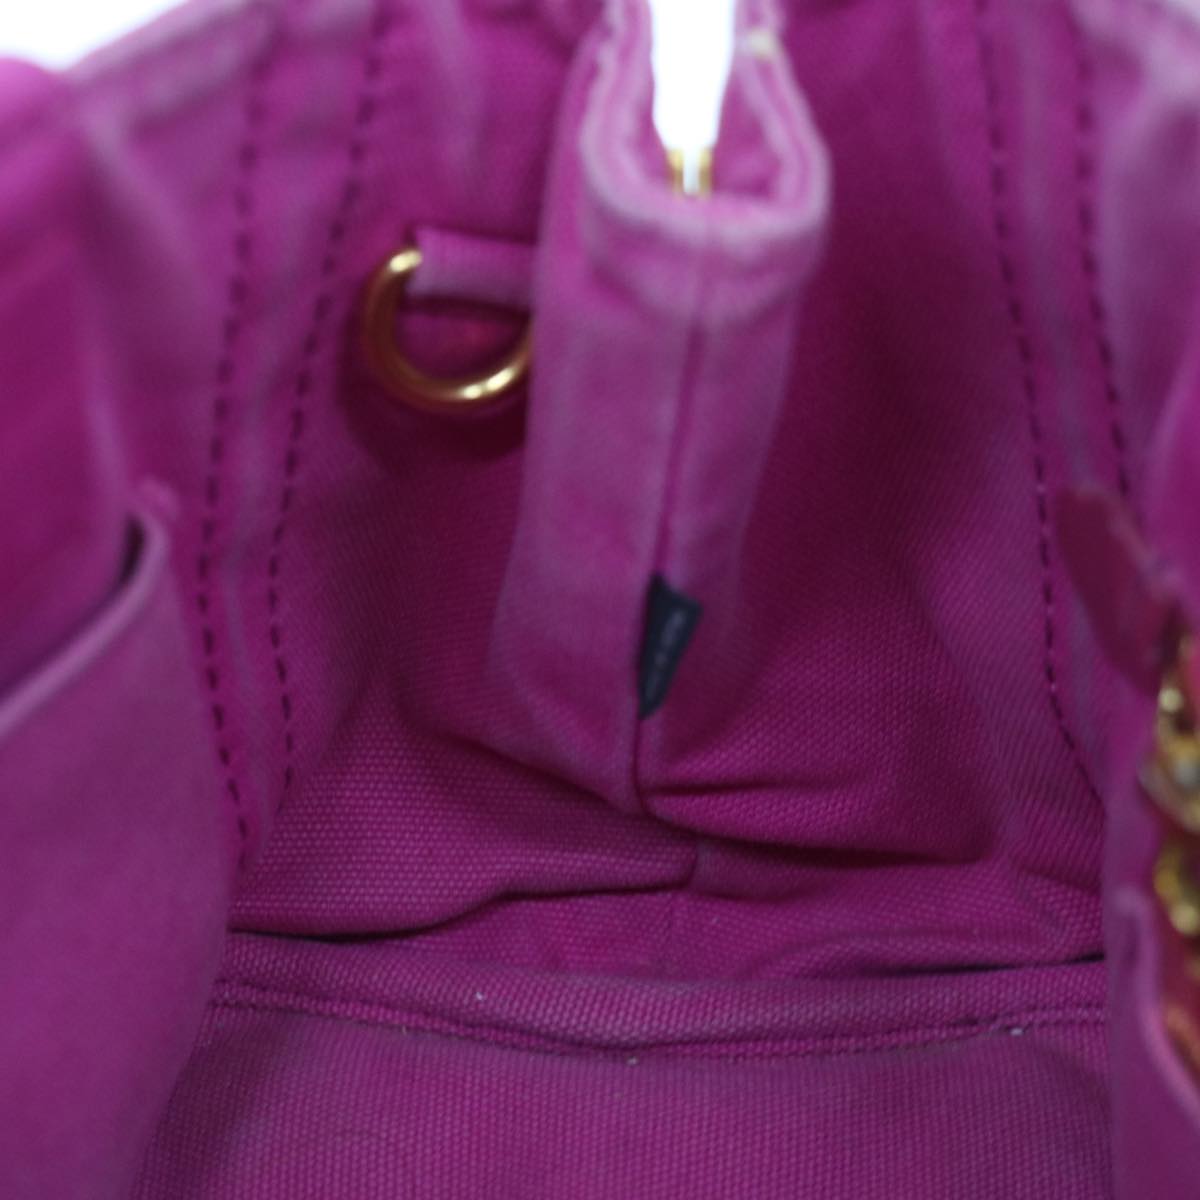 PRADA Canapa PM Hand Bag Canvas Pink Auth fm3153